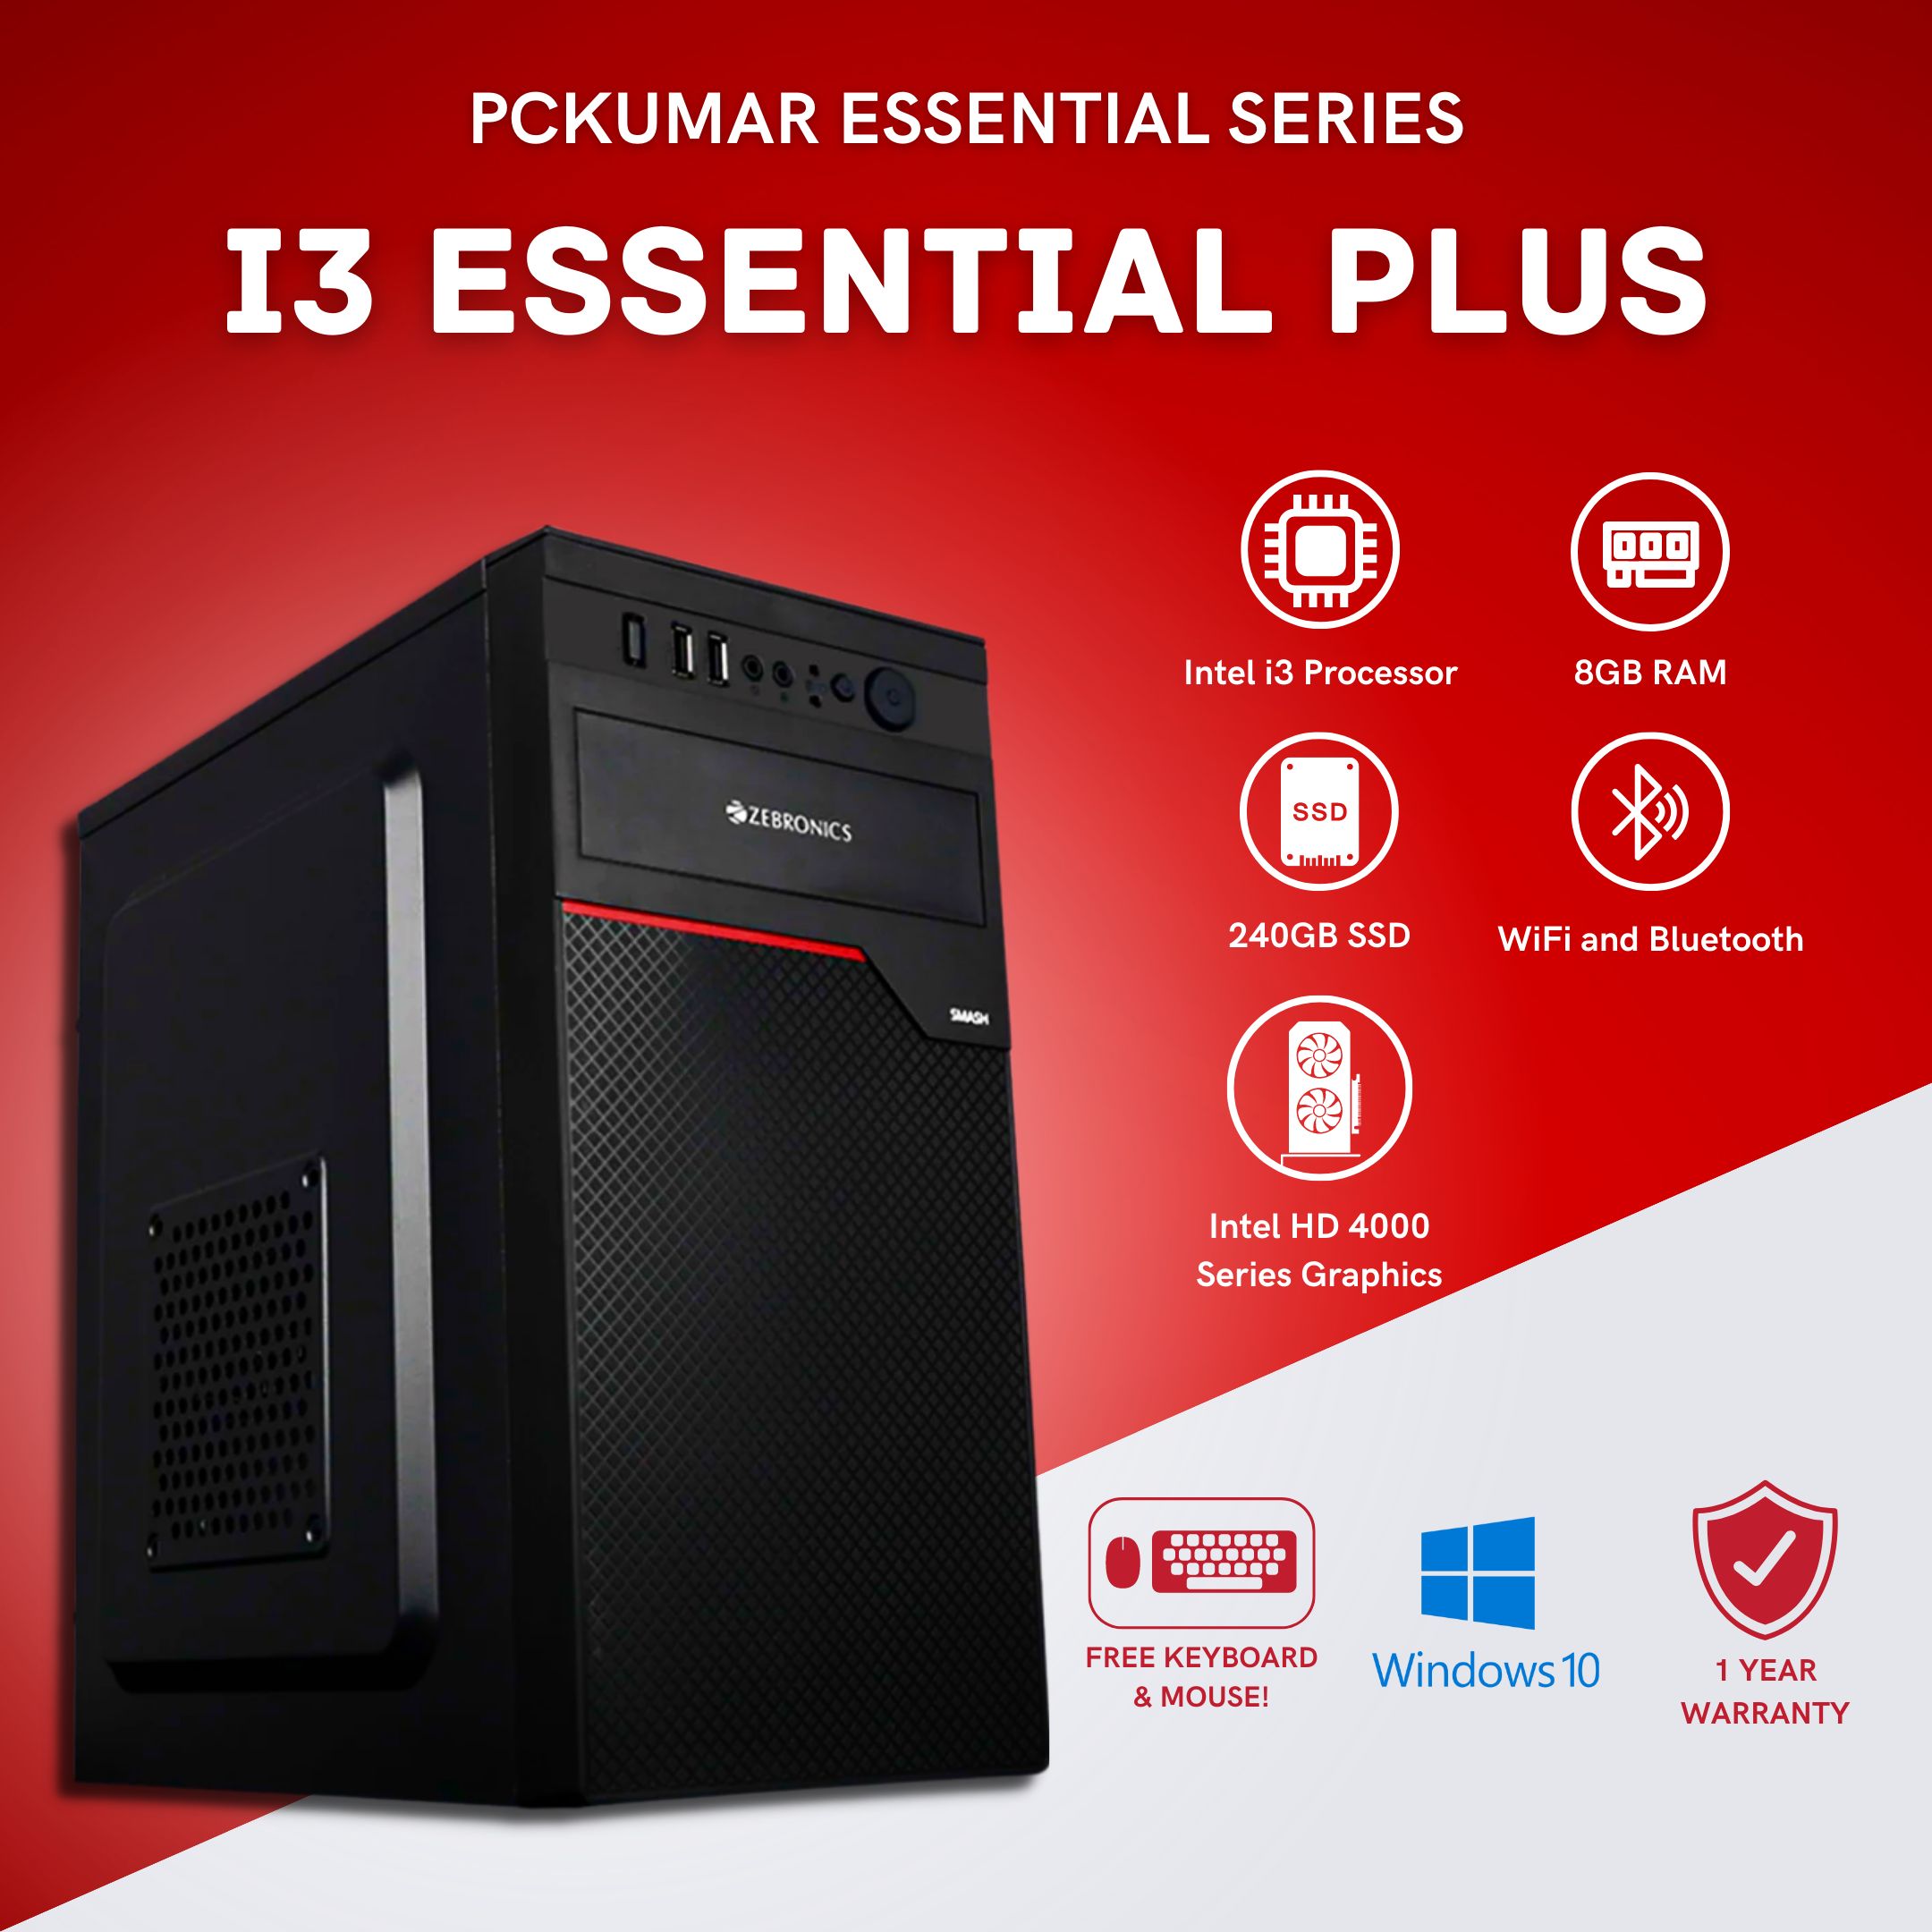 PC Kumar Essential Plus Intel i3 Basic PC for 12999/-